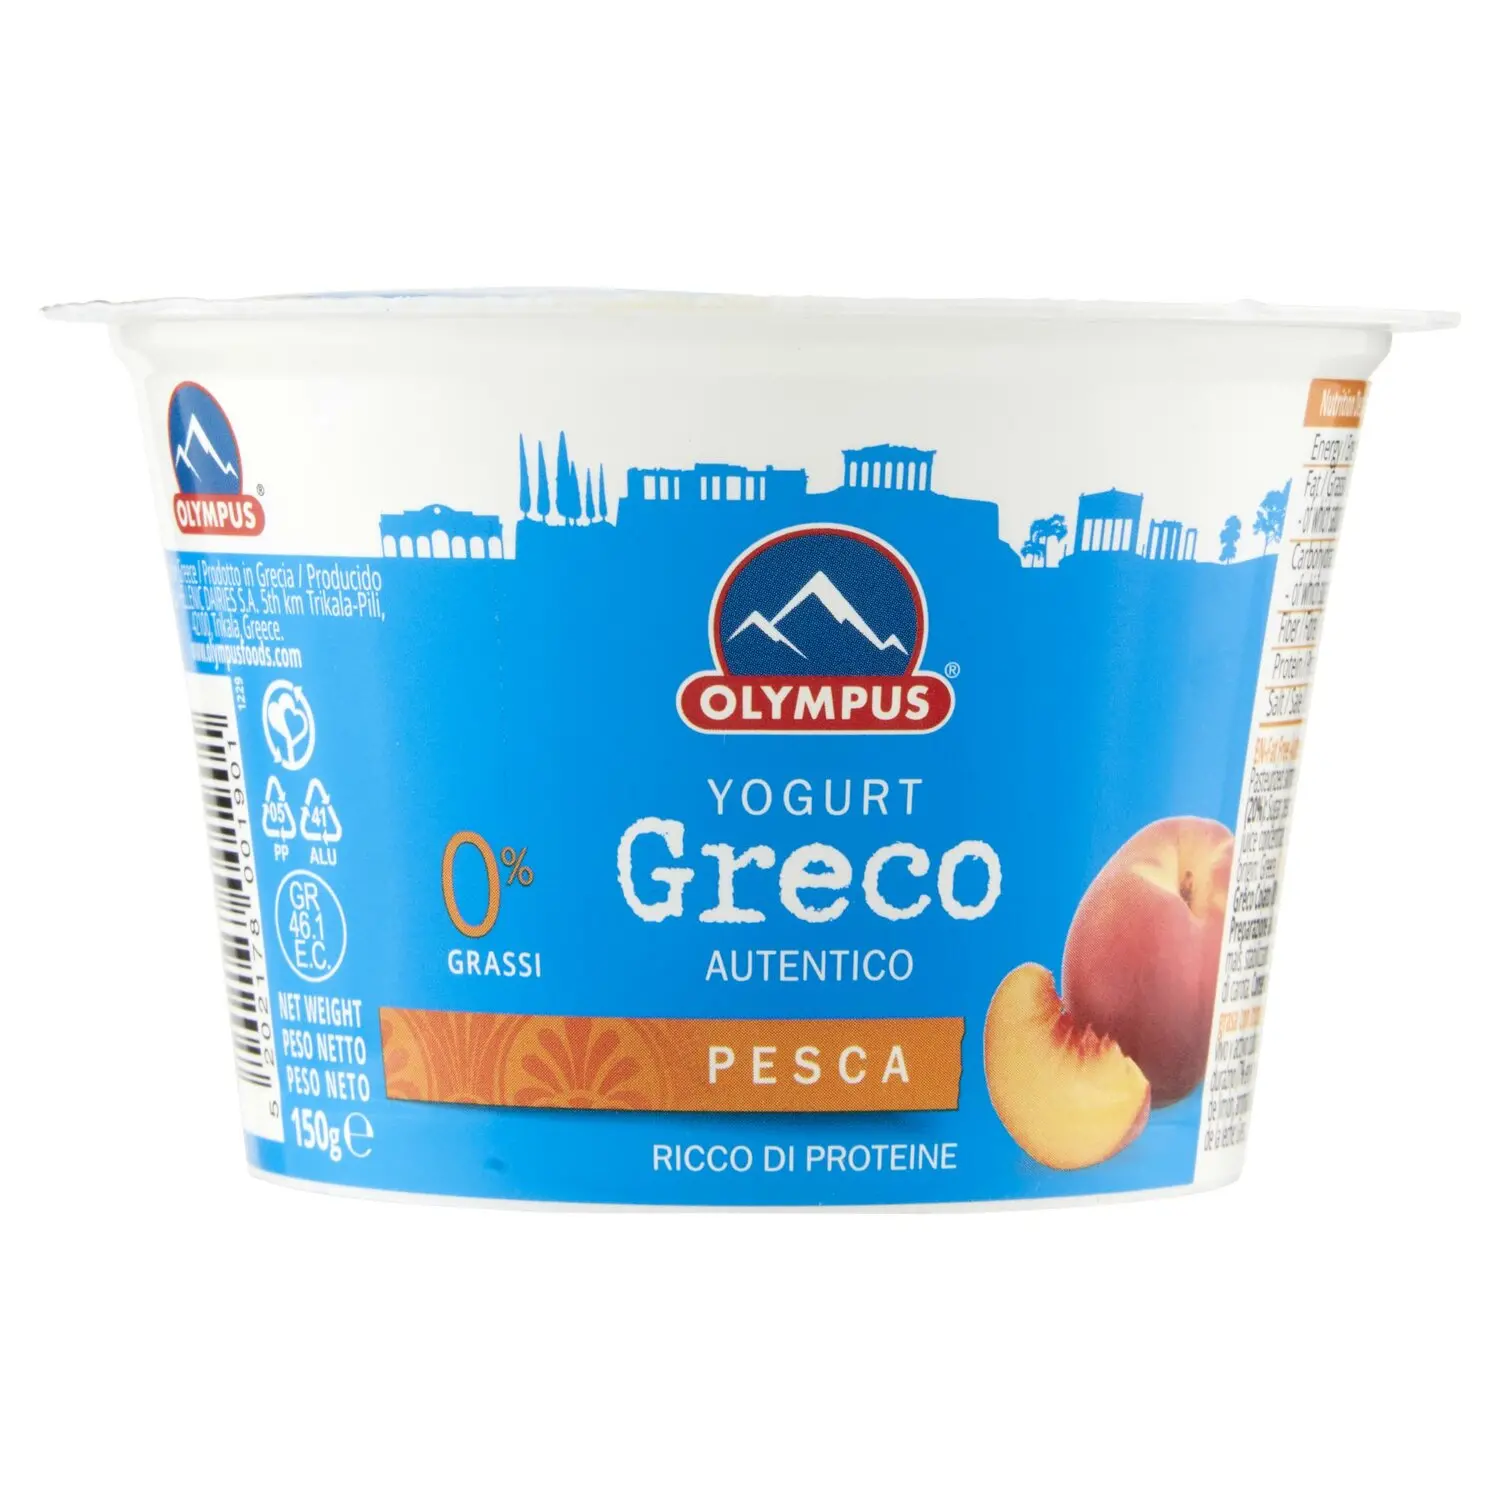 Olympus Yogurt Greco Autentico Pesca 0% Senza Grassi 150 g